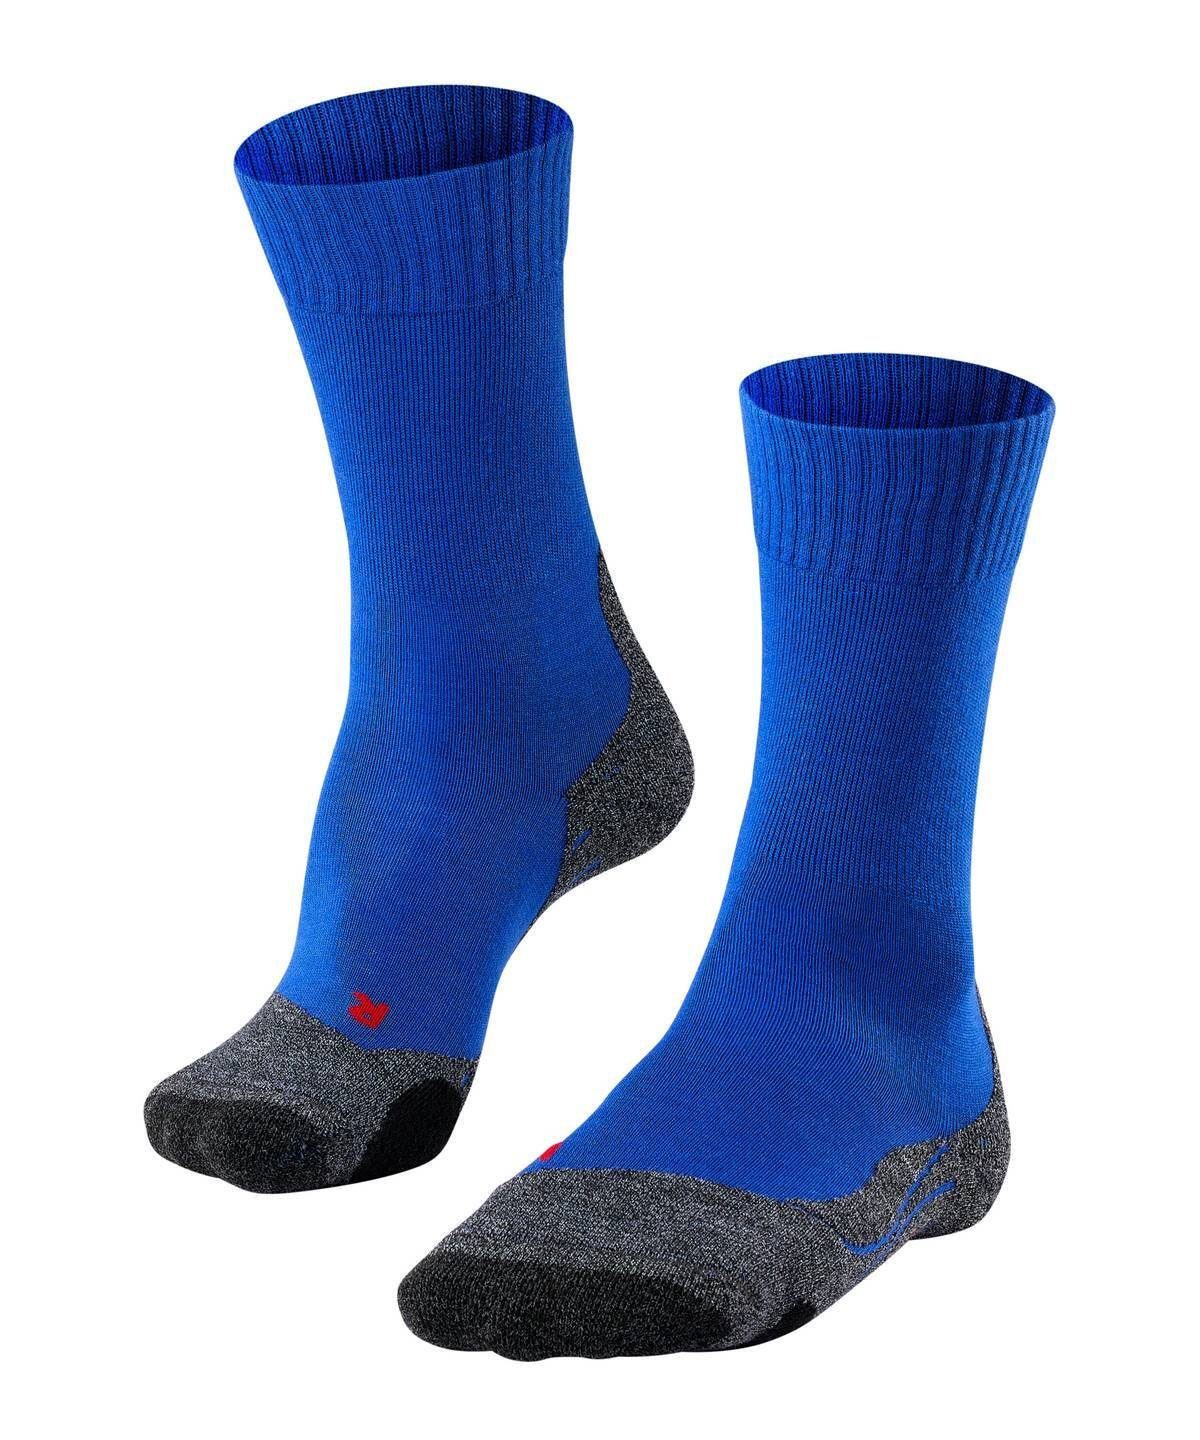 FALKE Sportsocken Herren Socken - Trekking Socken TK2, Polsterung Blau